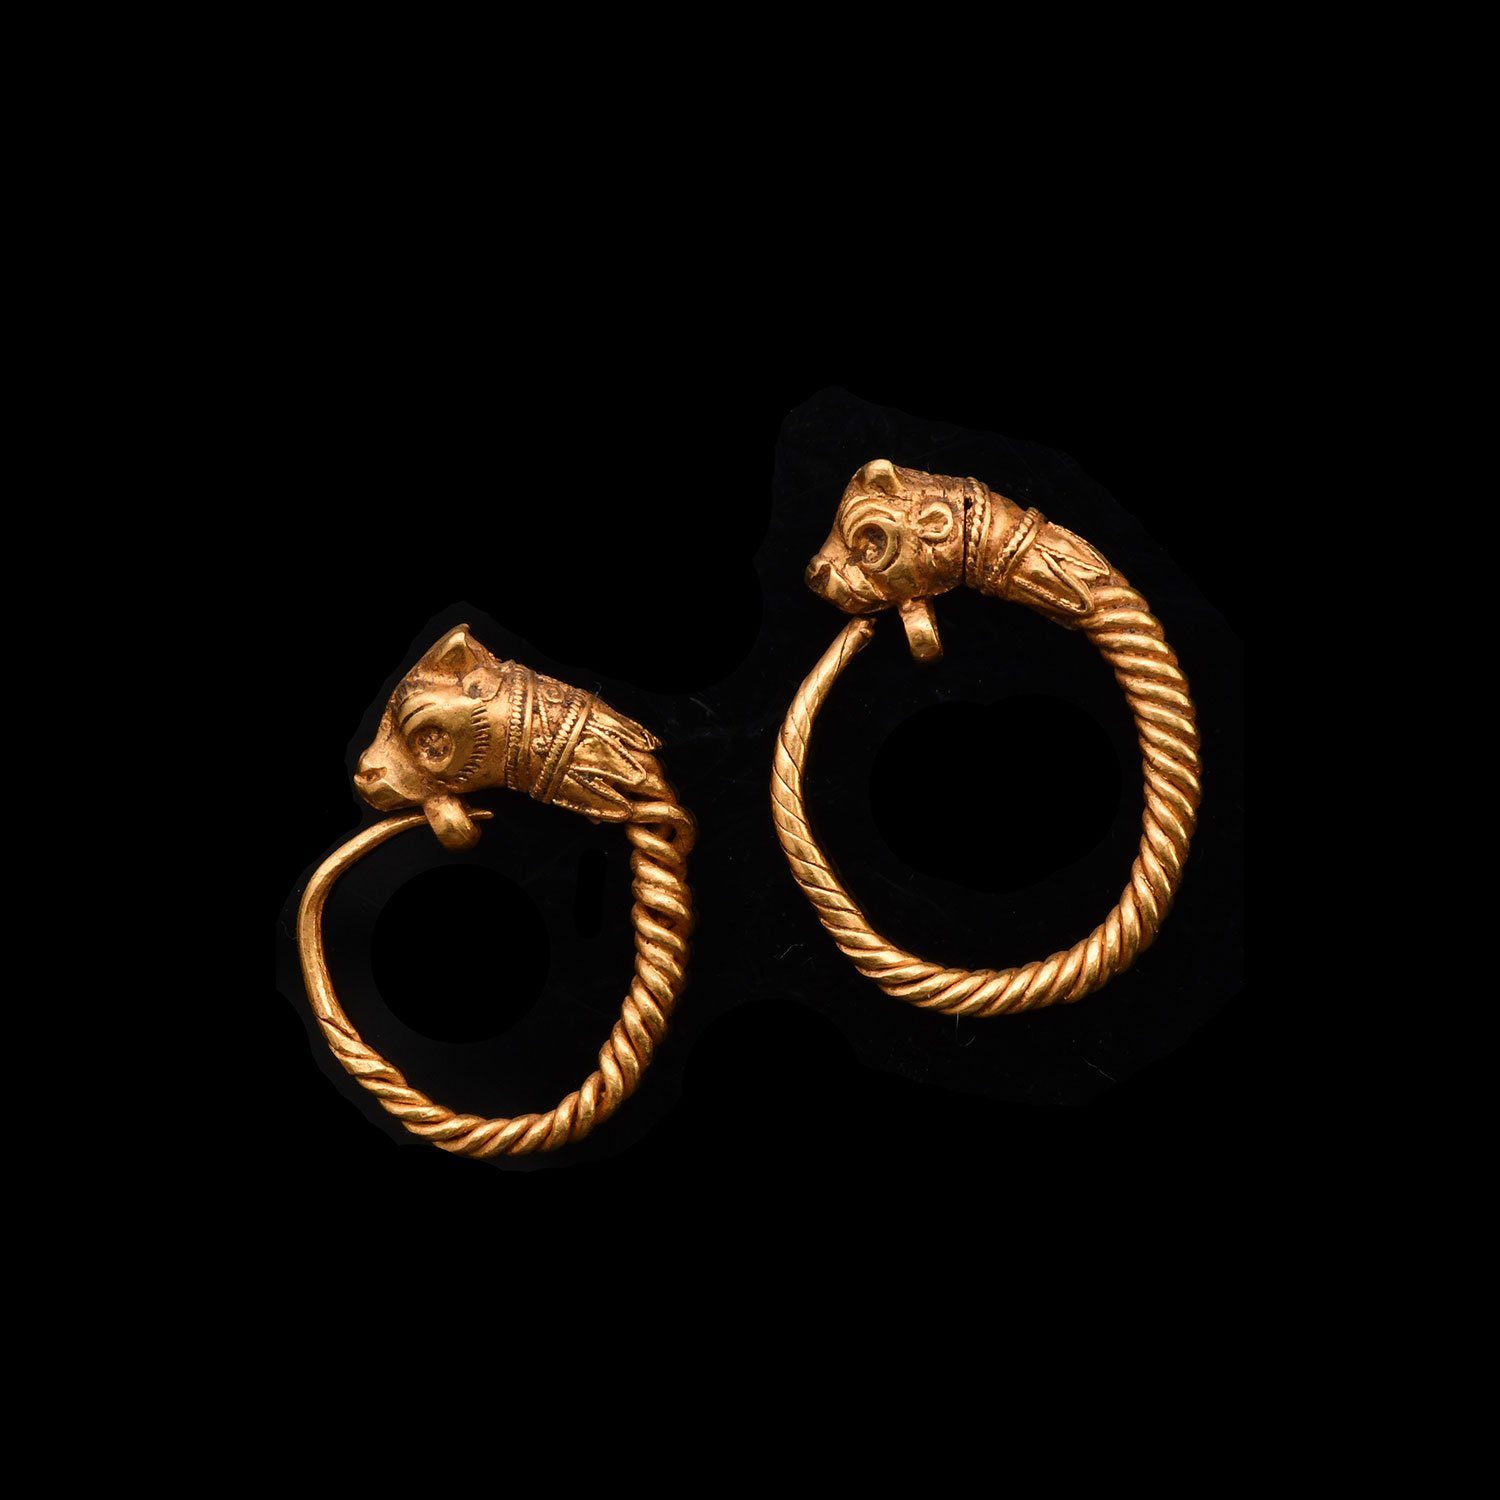 A fine pair of Greek Antelope Earrings, Hellenistic Period, ca. 3rd - 1st century BCE